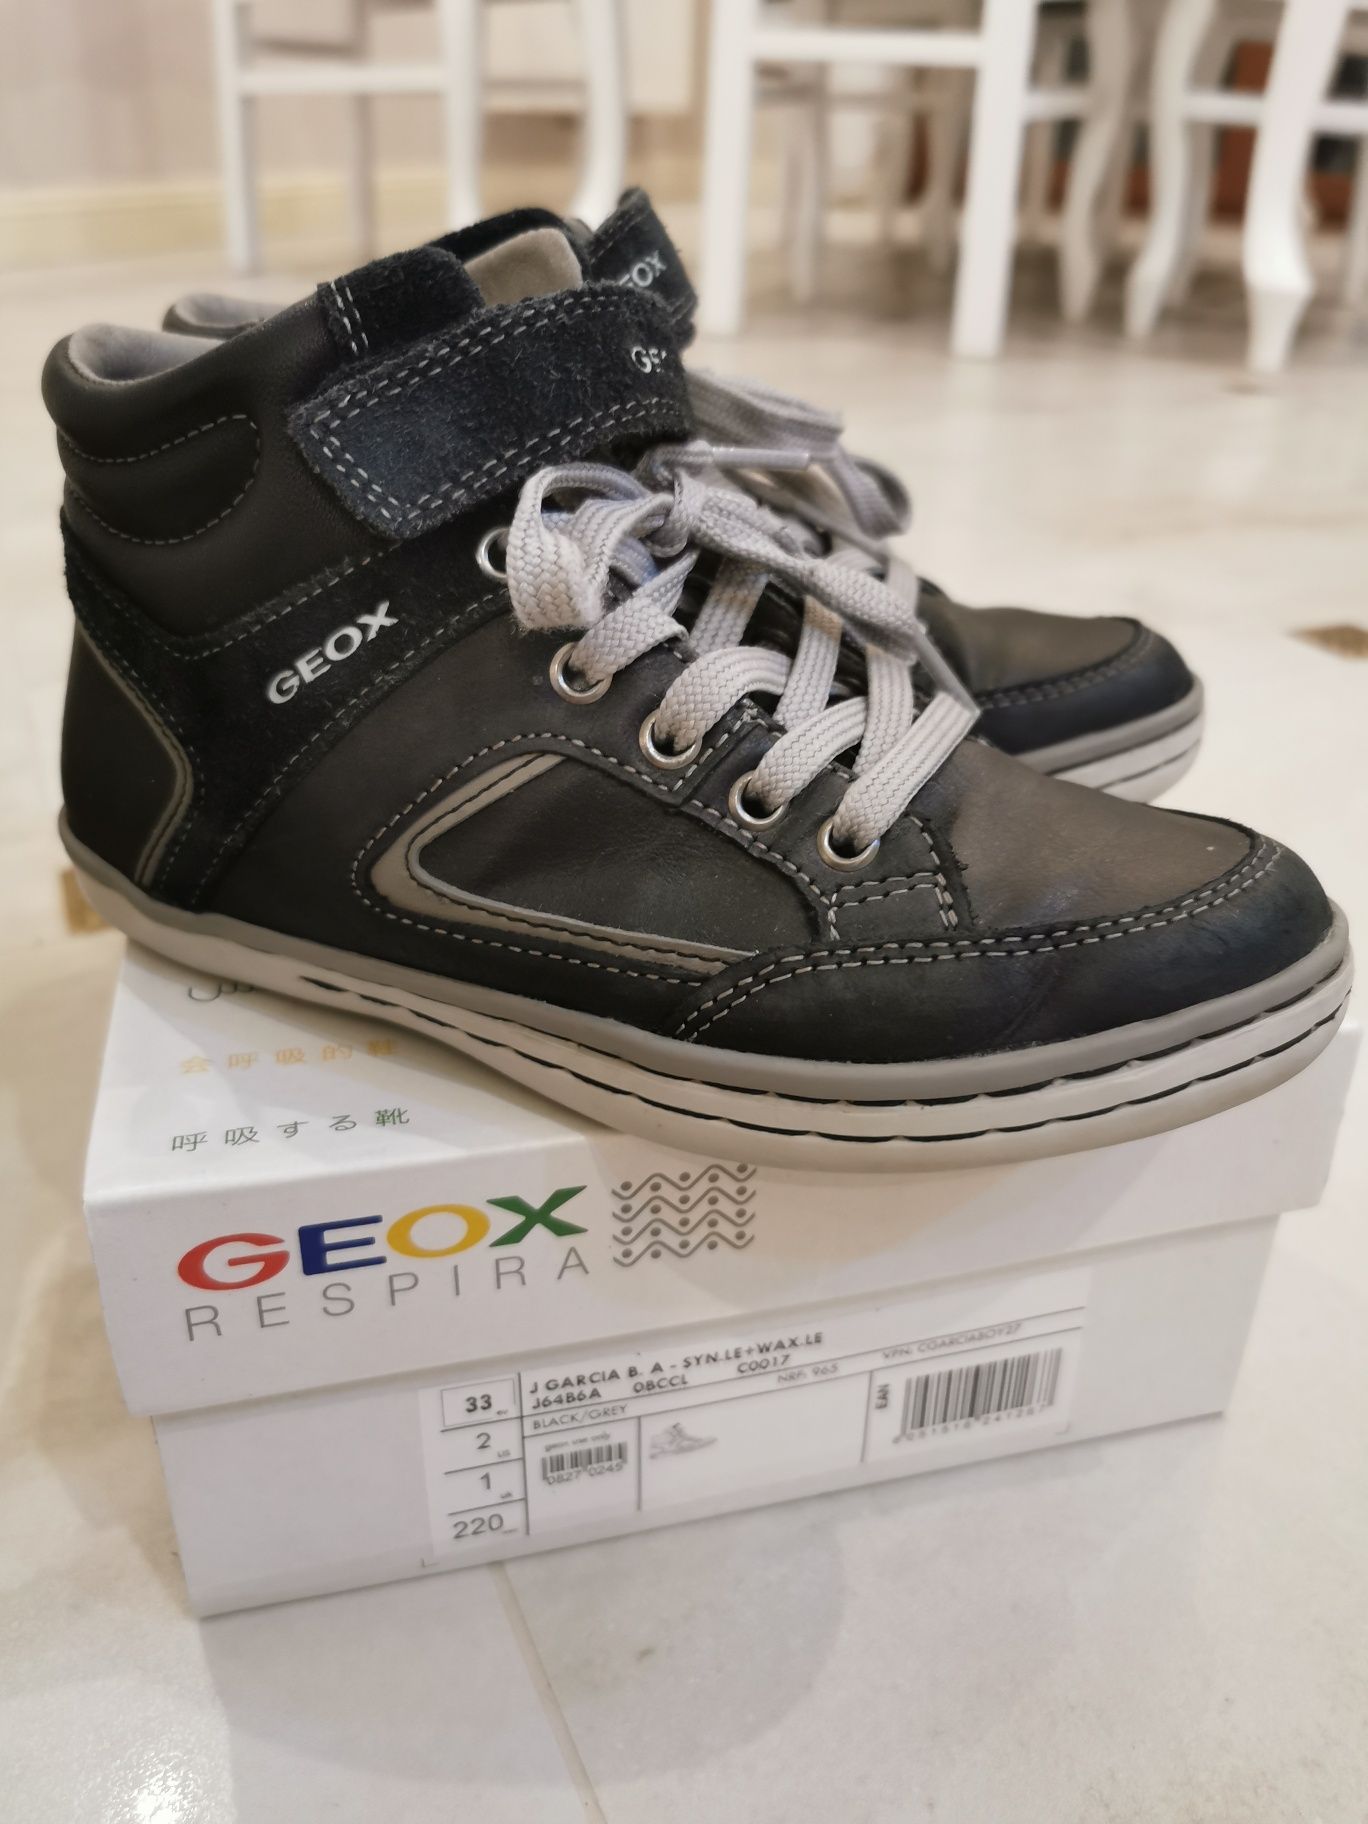 Sneakersy Trzewiki Geox Respira 33 dł. 21,5 cm gratis buty pepperts